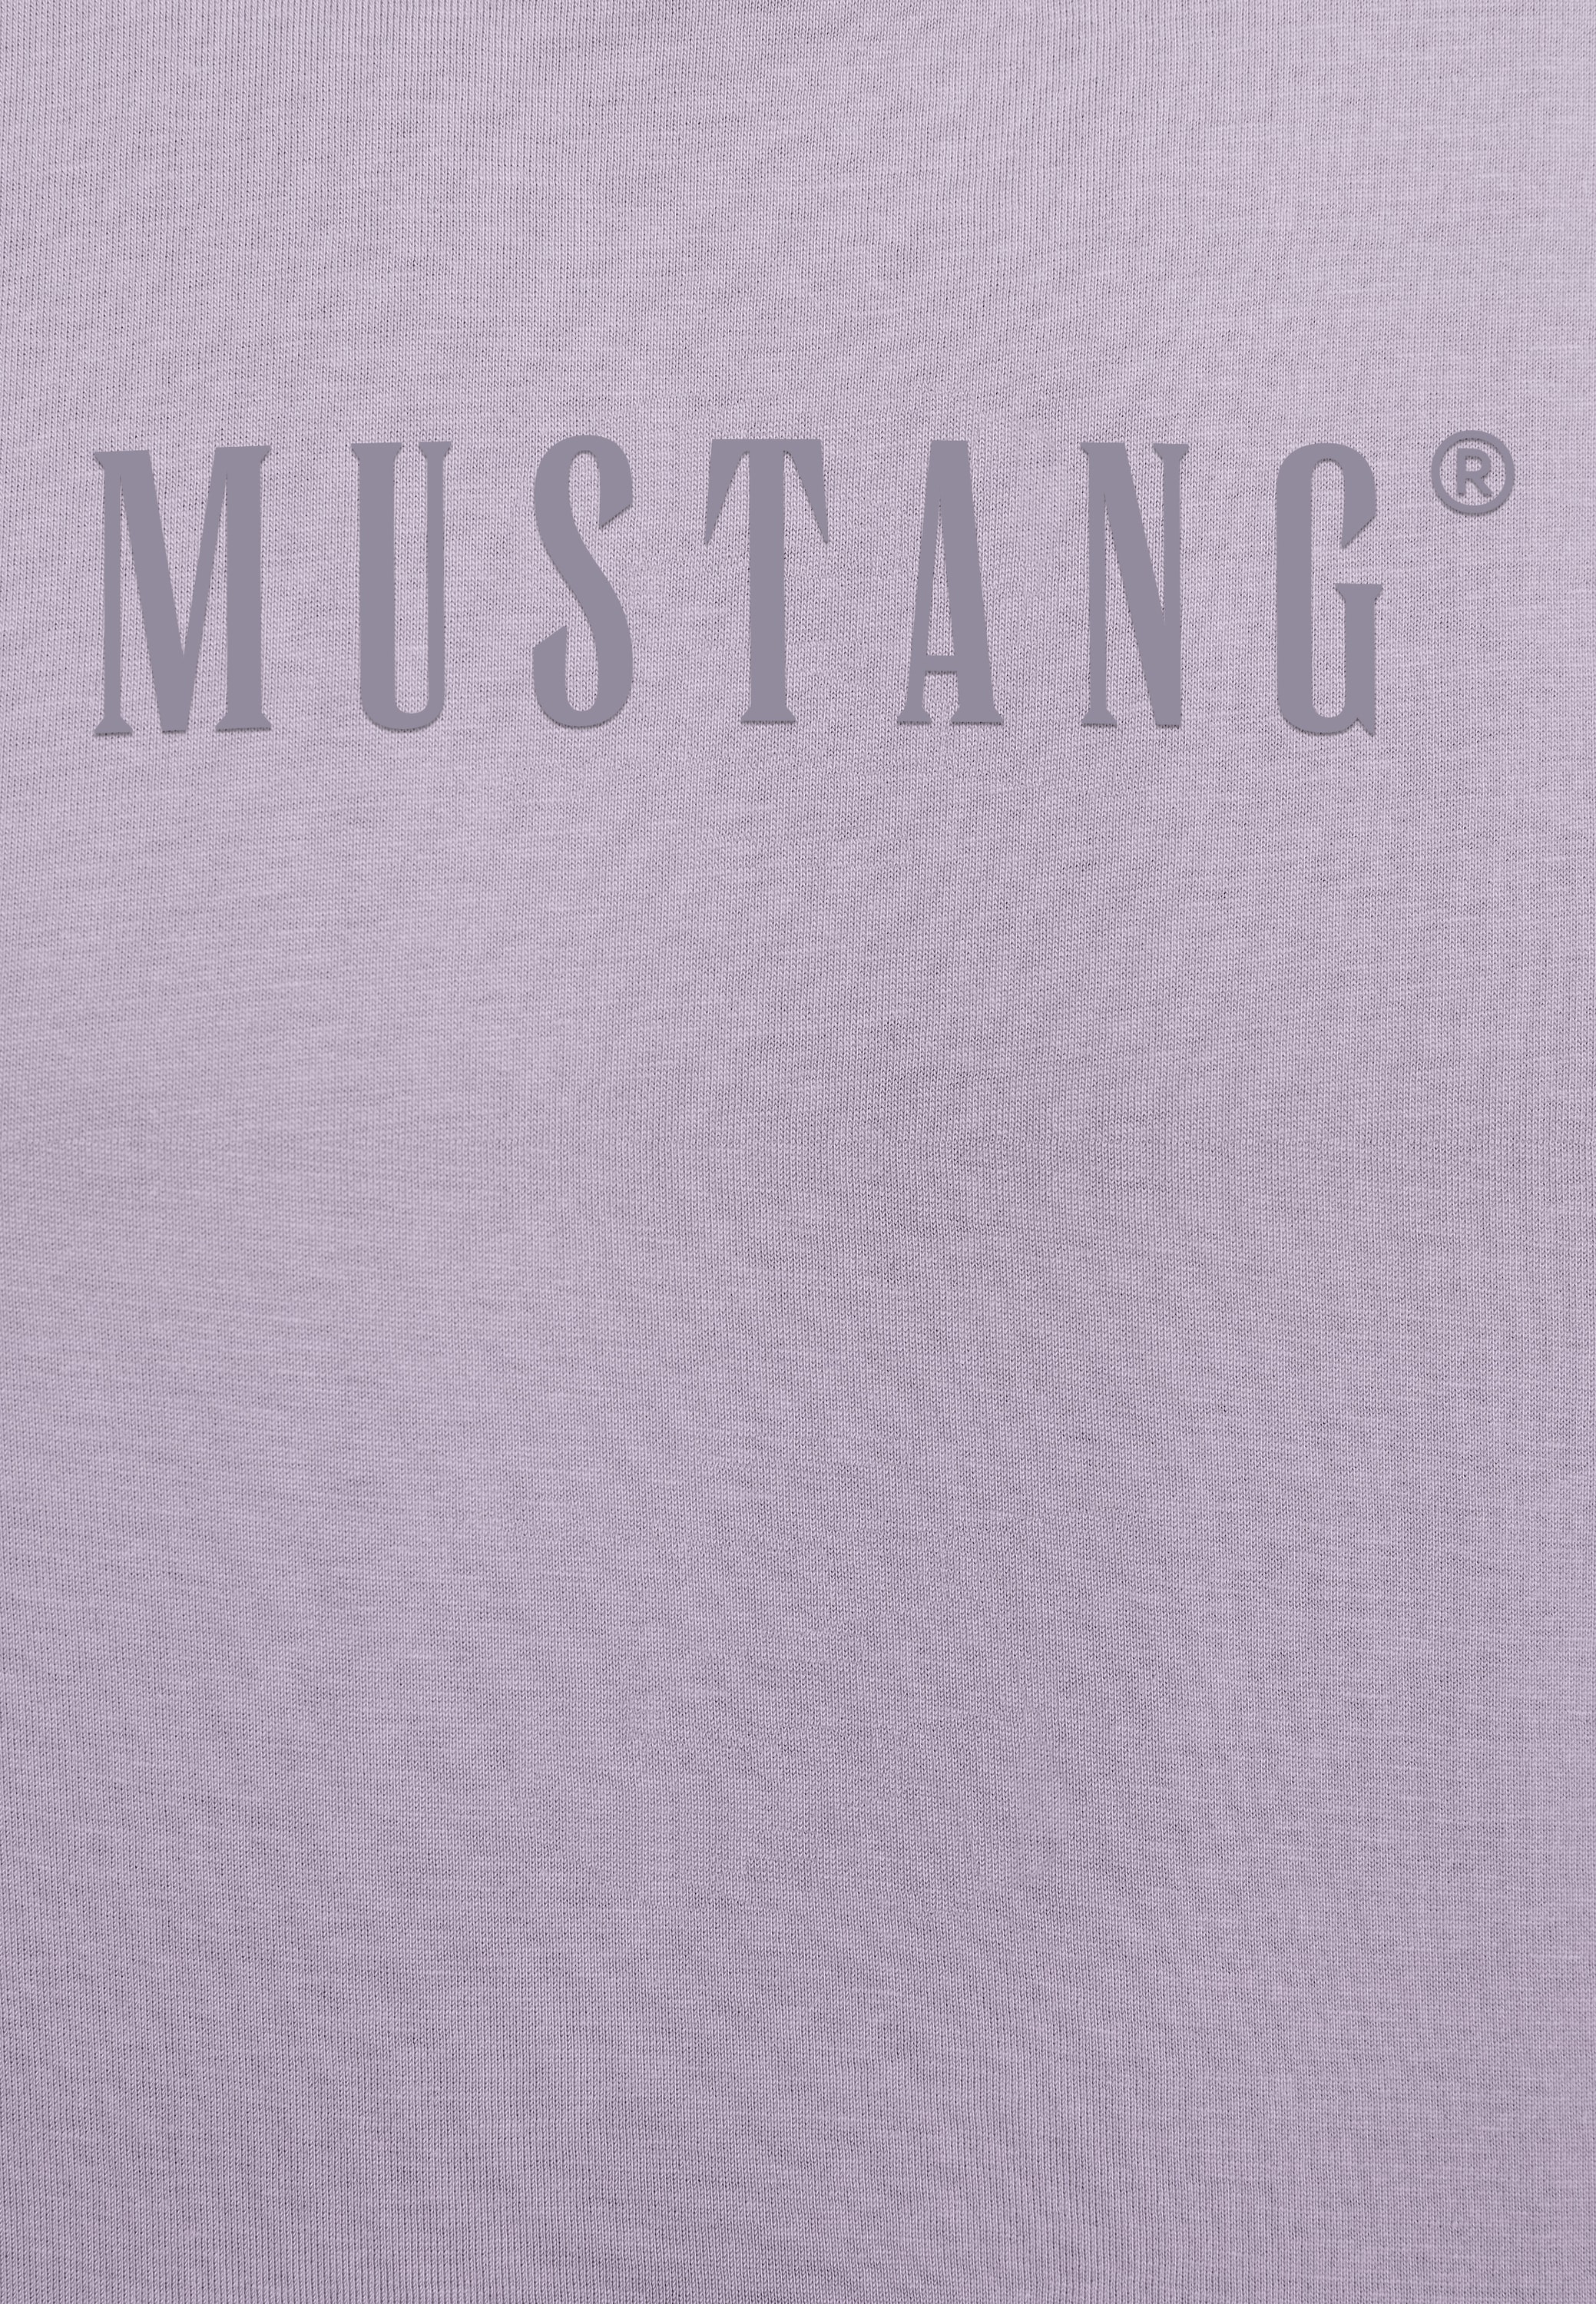 MUSTANG Sweatshirt »Style Bea C Logo Print«